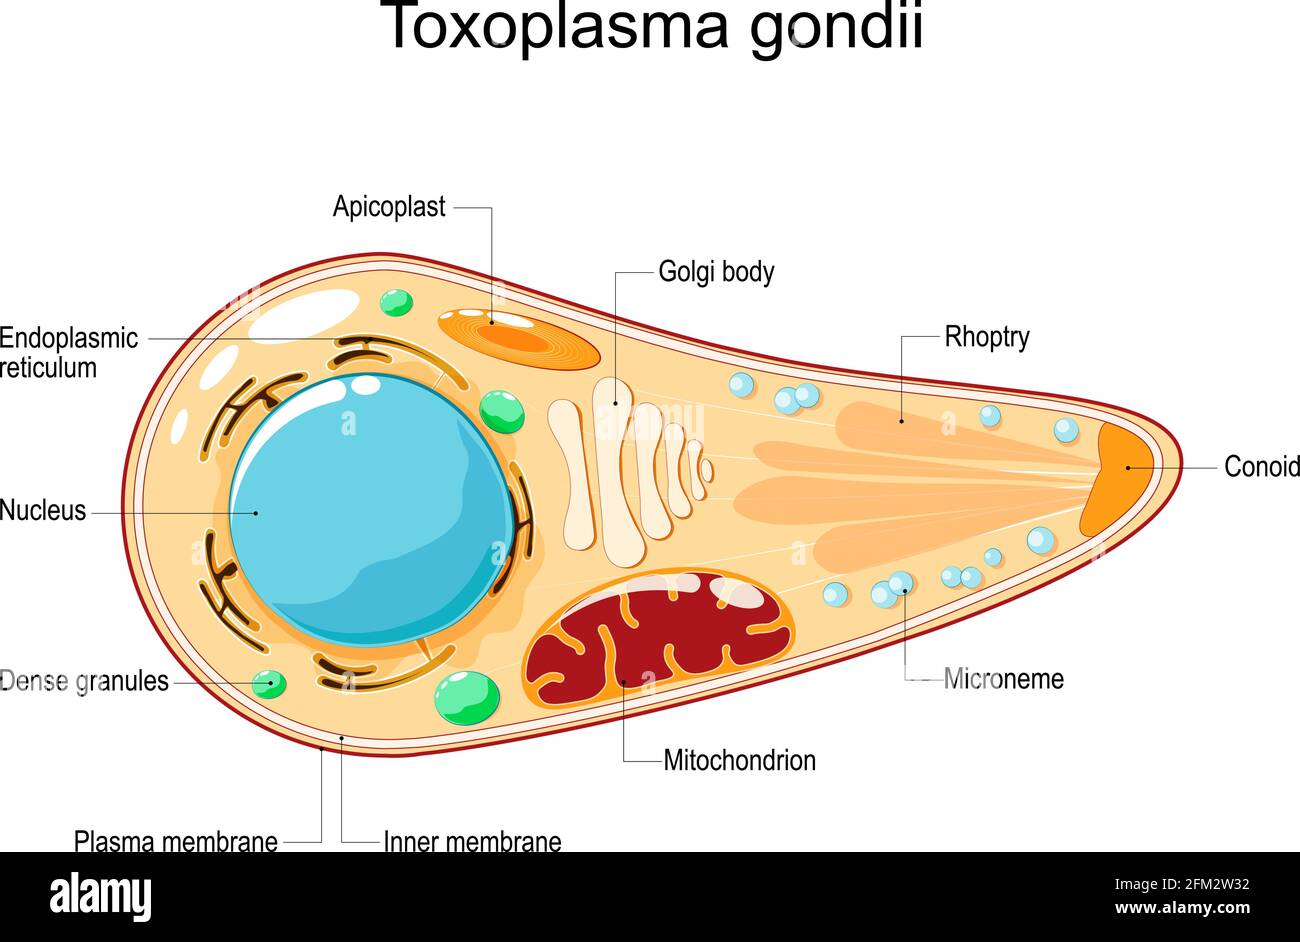 protozoan cell diagram